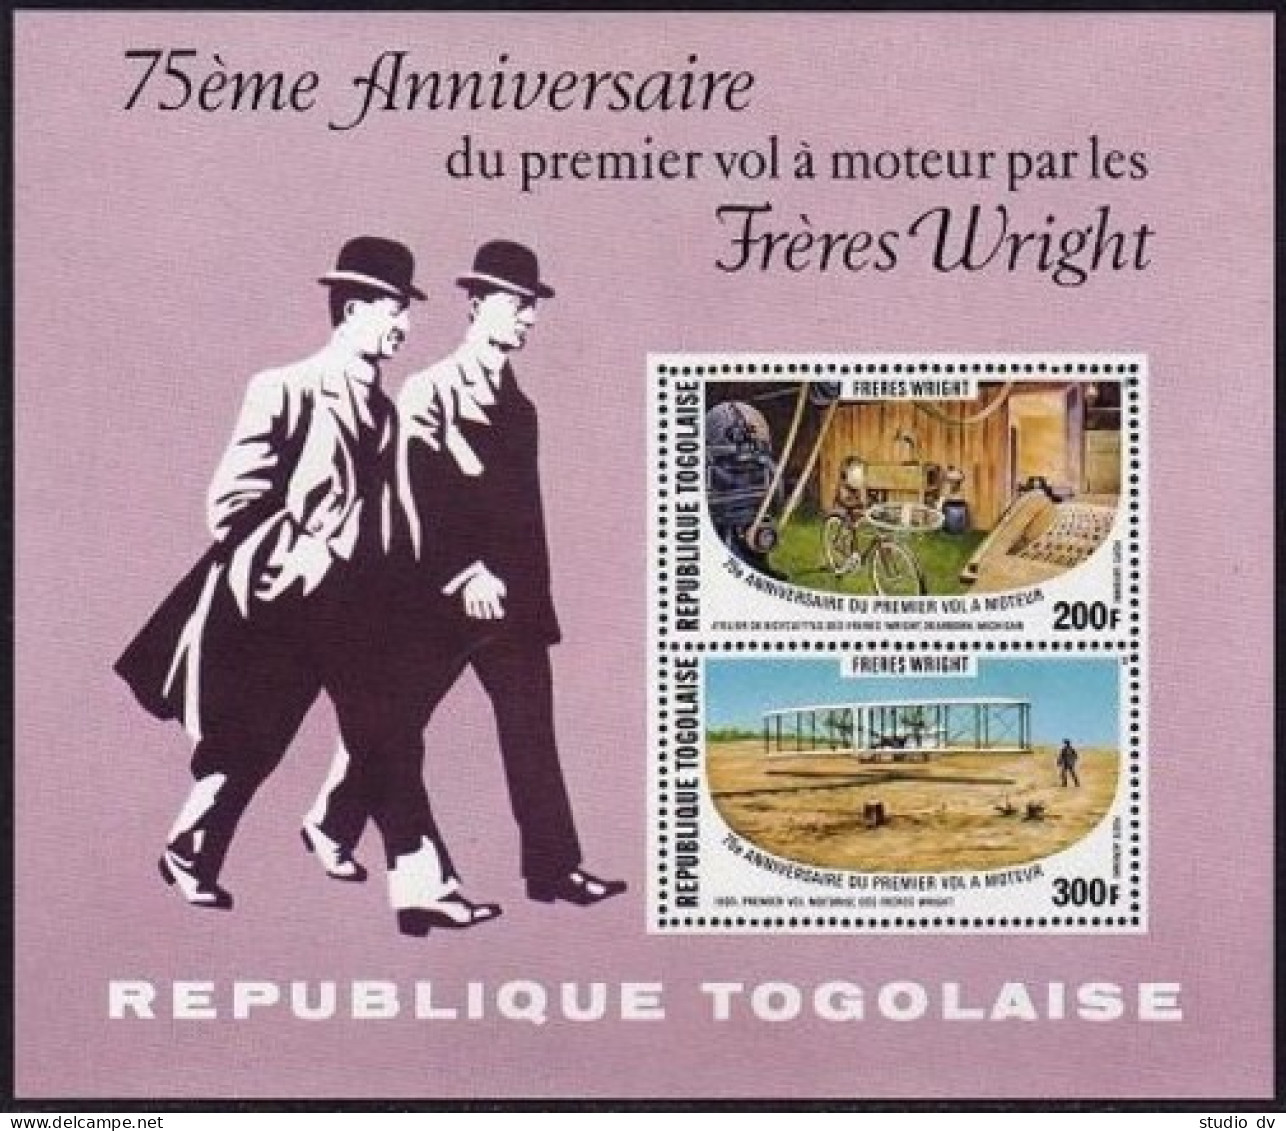 Togo 976-C339,C339a, MNH. Mi 1270-1275, Bl.124. Wright Brothers Flight,75. 1978. - Togo (1960-...)